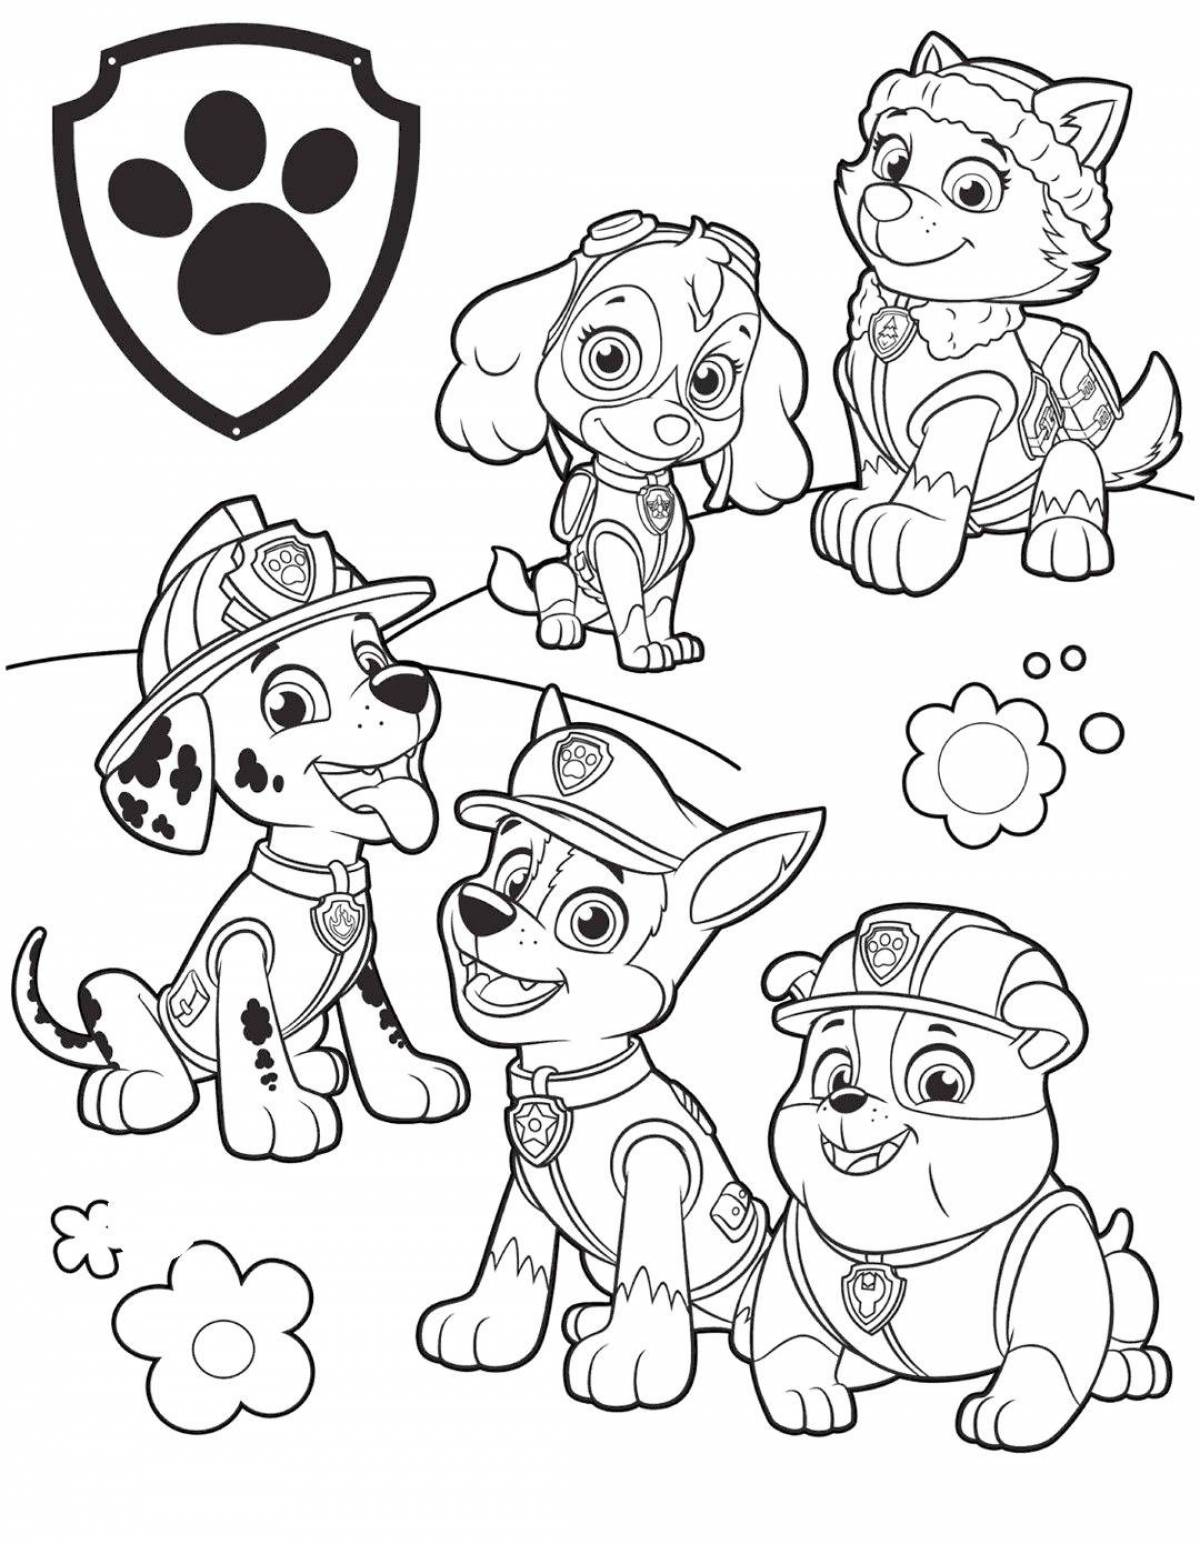 Fun Paw Patrol coloring book for kids